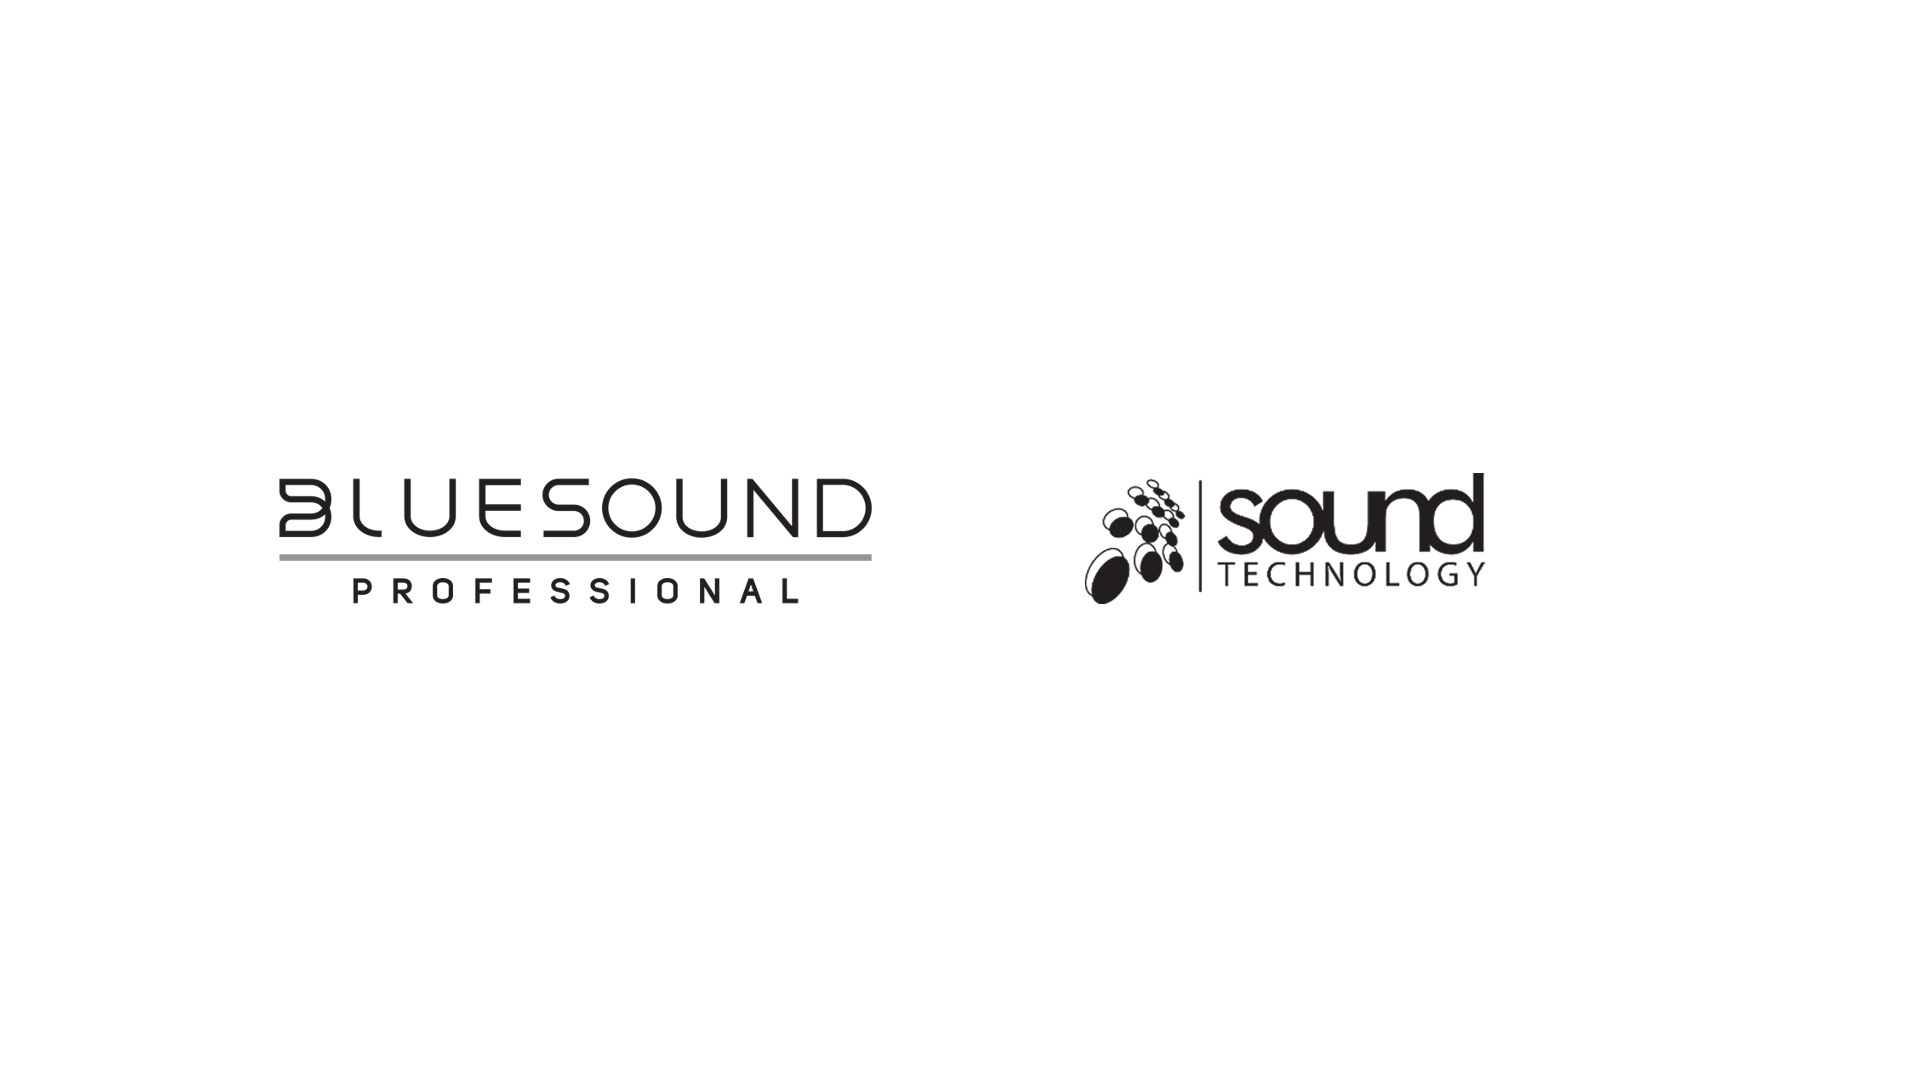 Bluesound Professional and Sound Technology Ltd. Logos on white background